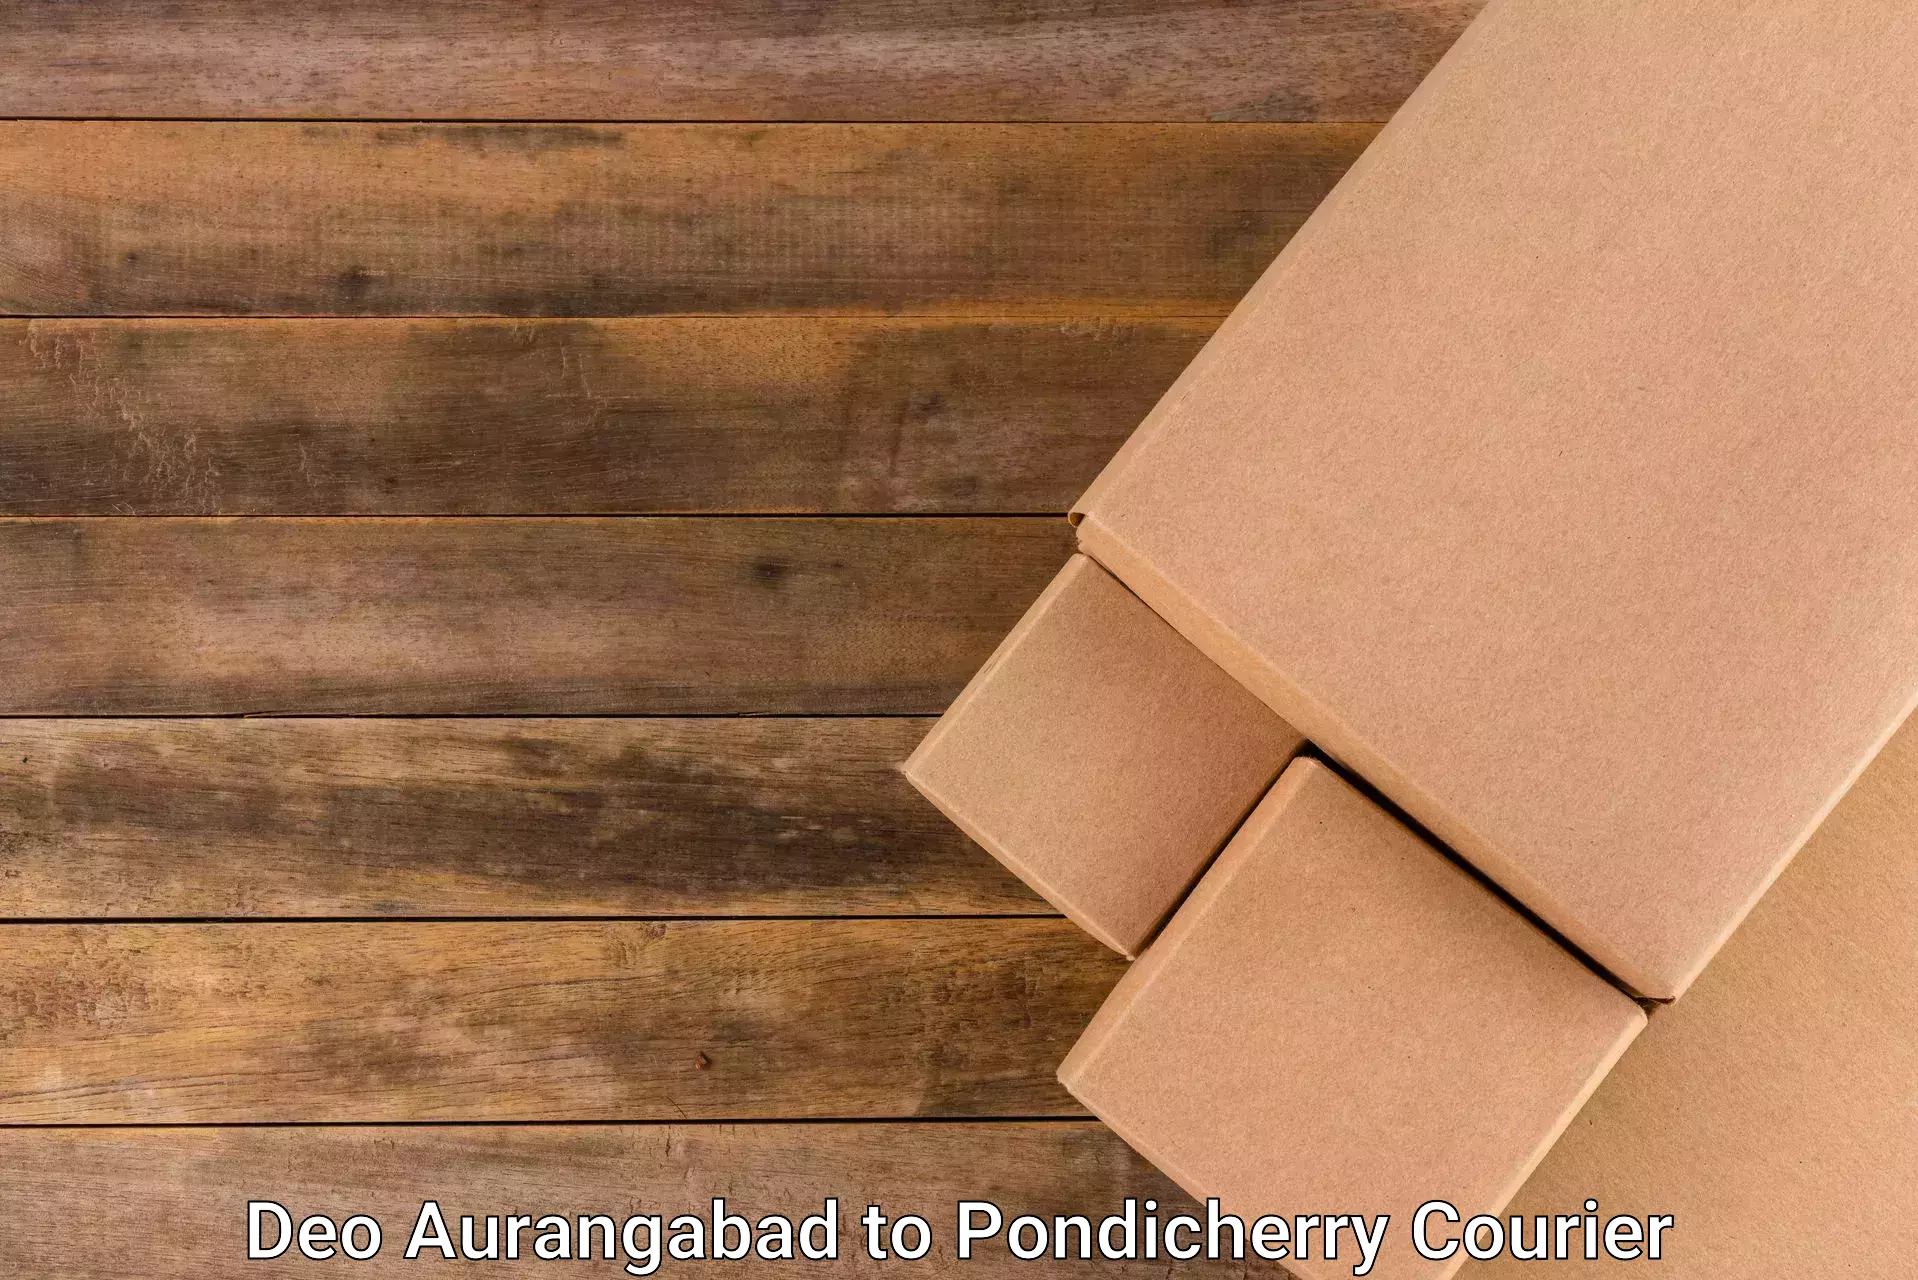 Efficient order fulfillment Deo Aurangabad to Pondicherry